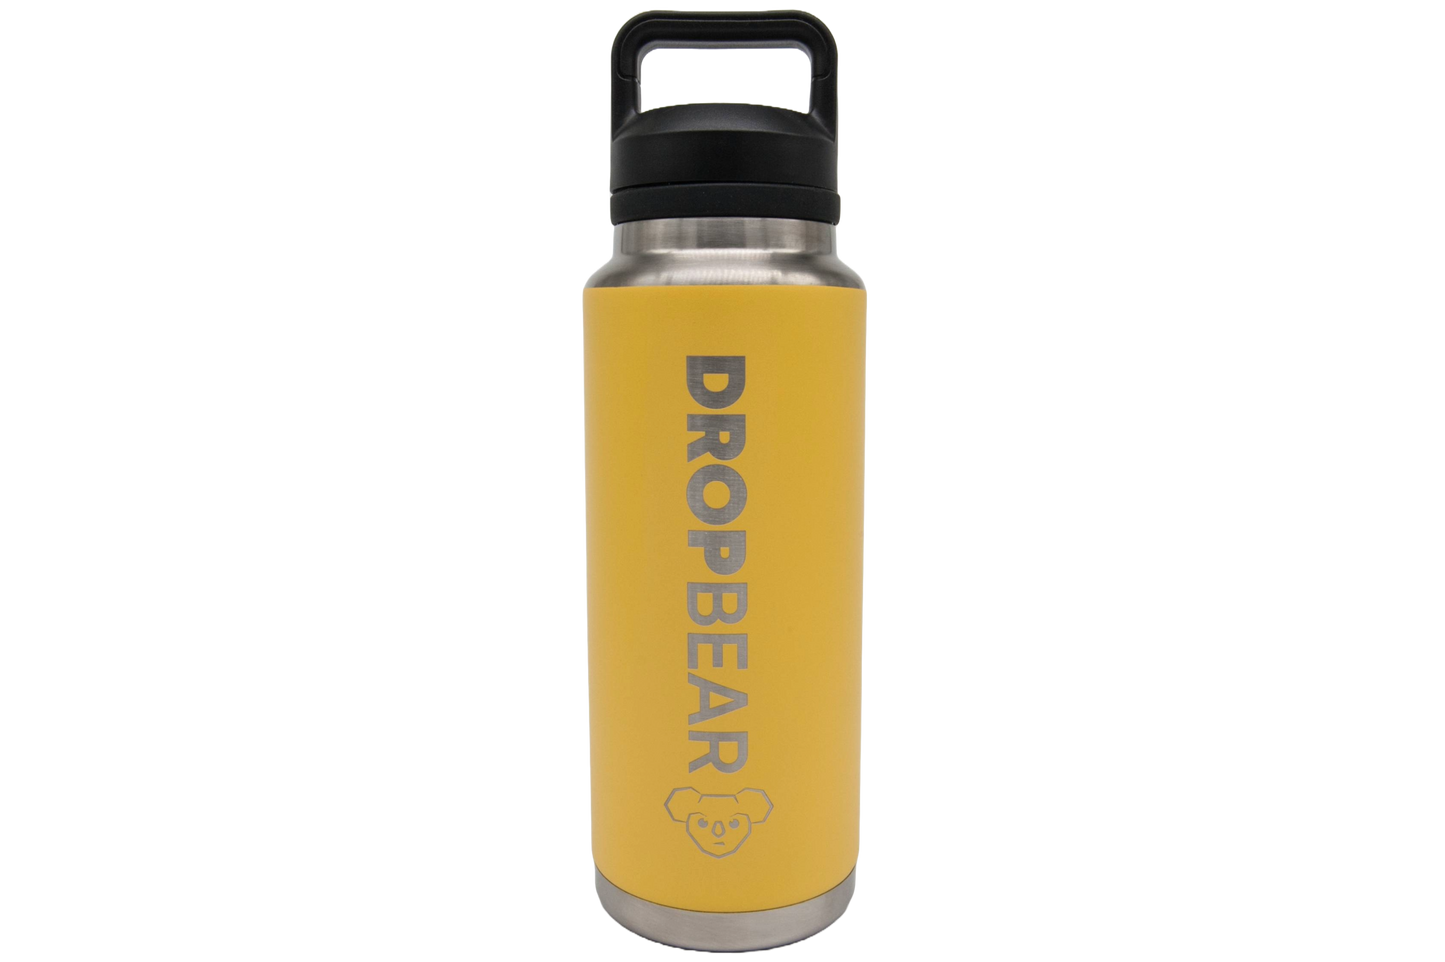 DROPBEAR - 800ml & 1100ml bottles - 🇦🇺 AVAILABLE NOW🐨